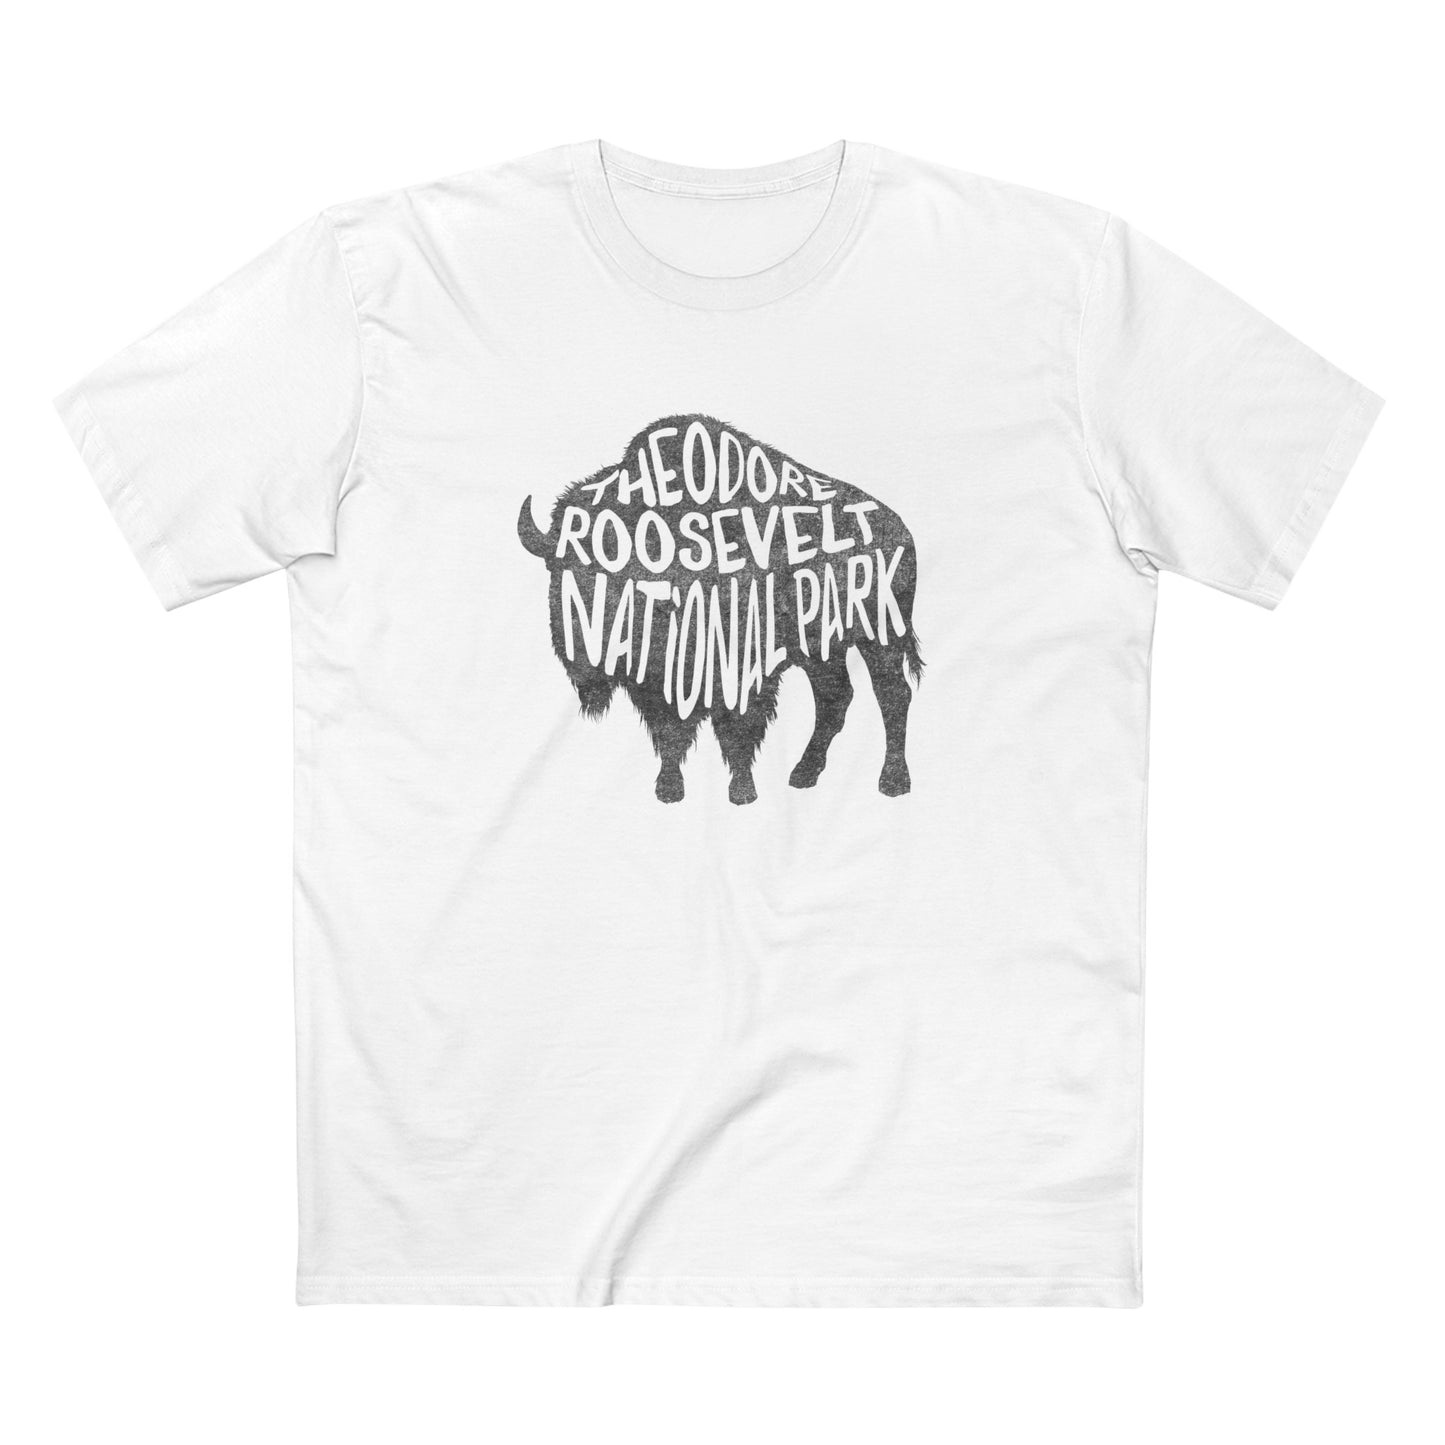 Theodore Roosevelt National Park T-Shirt - Bison